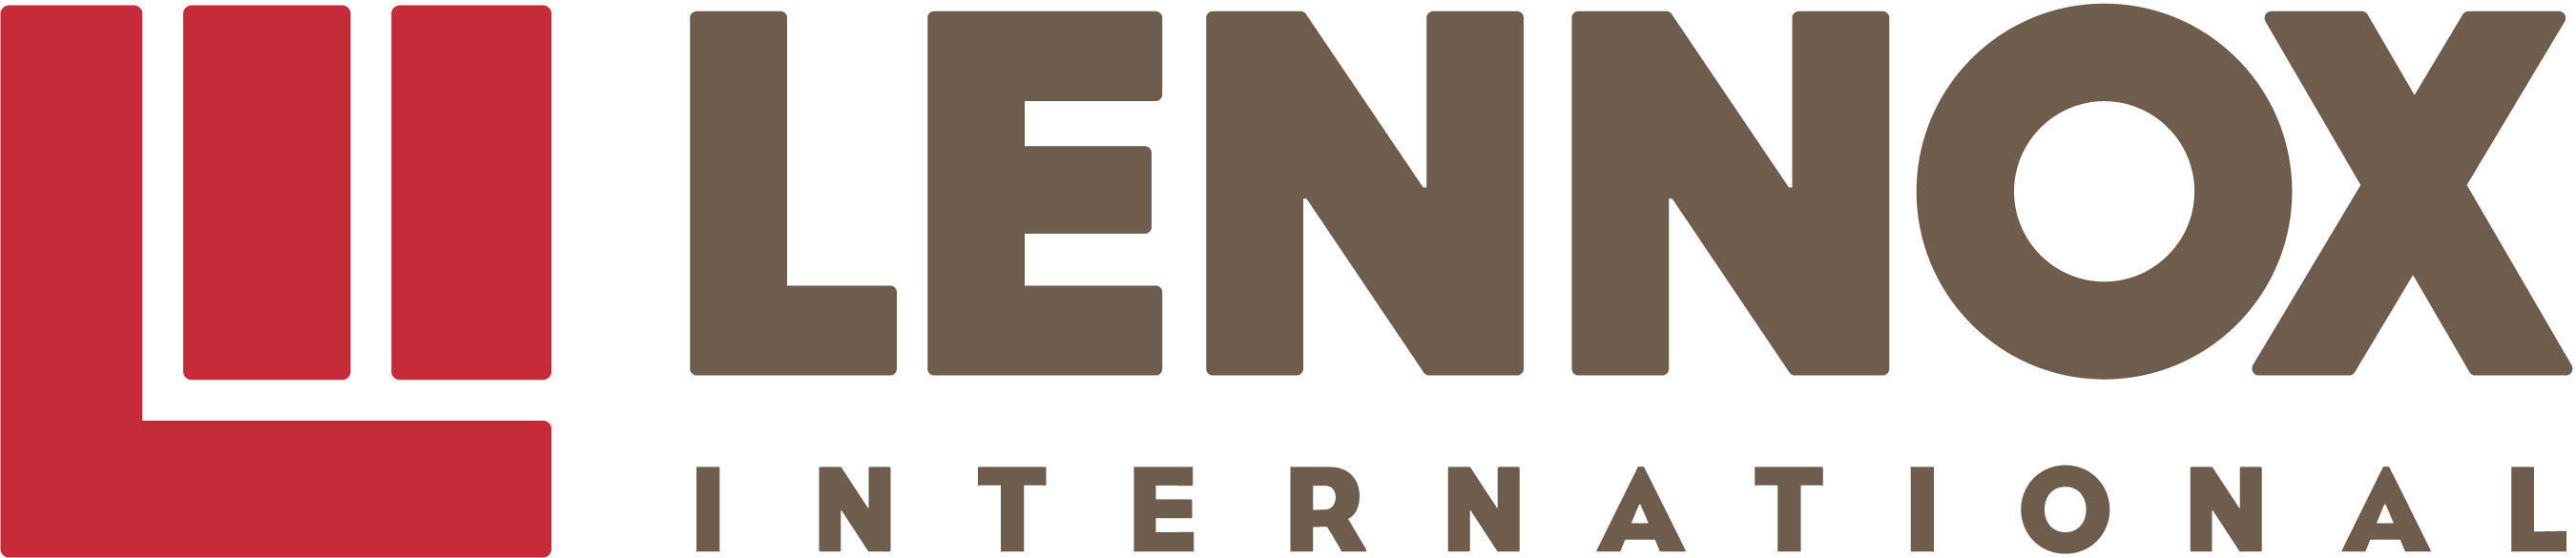 Lennox International Inc. corporate logo